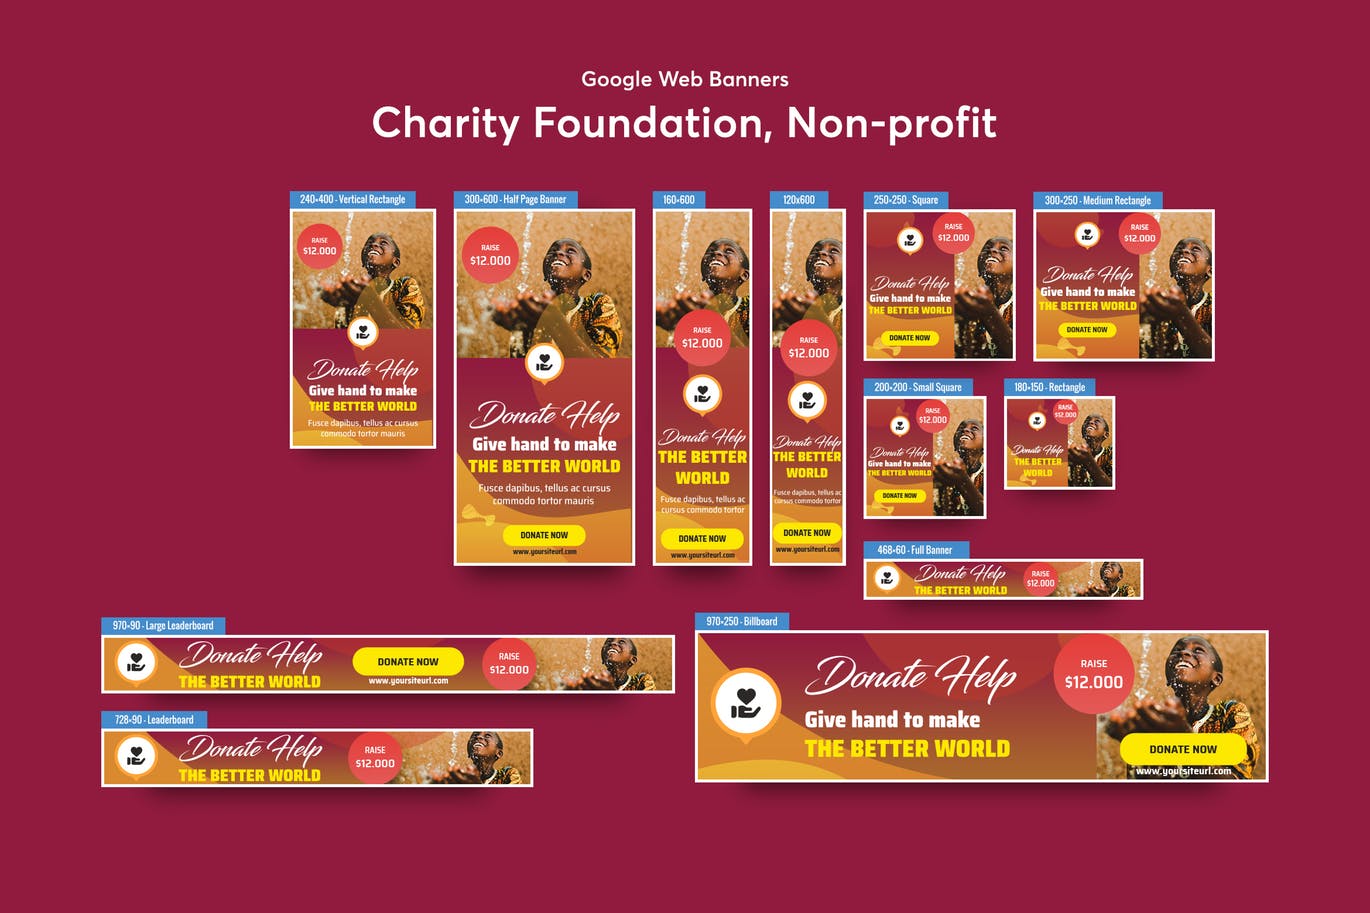 慈善基金会非营利组织推广Banner第一素材精选广告模板 Charity Foundation, Non-profit Banners Ad插图